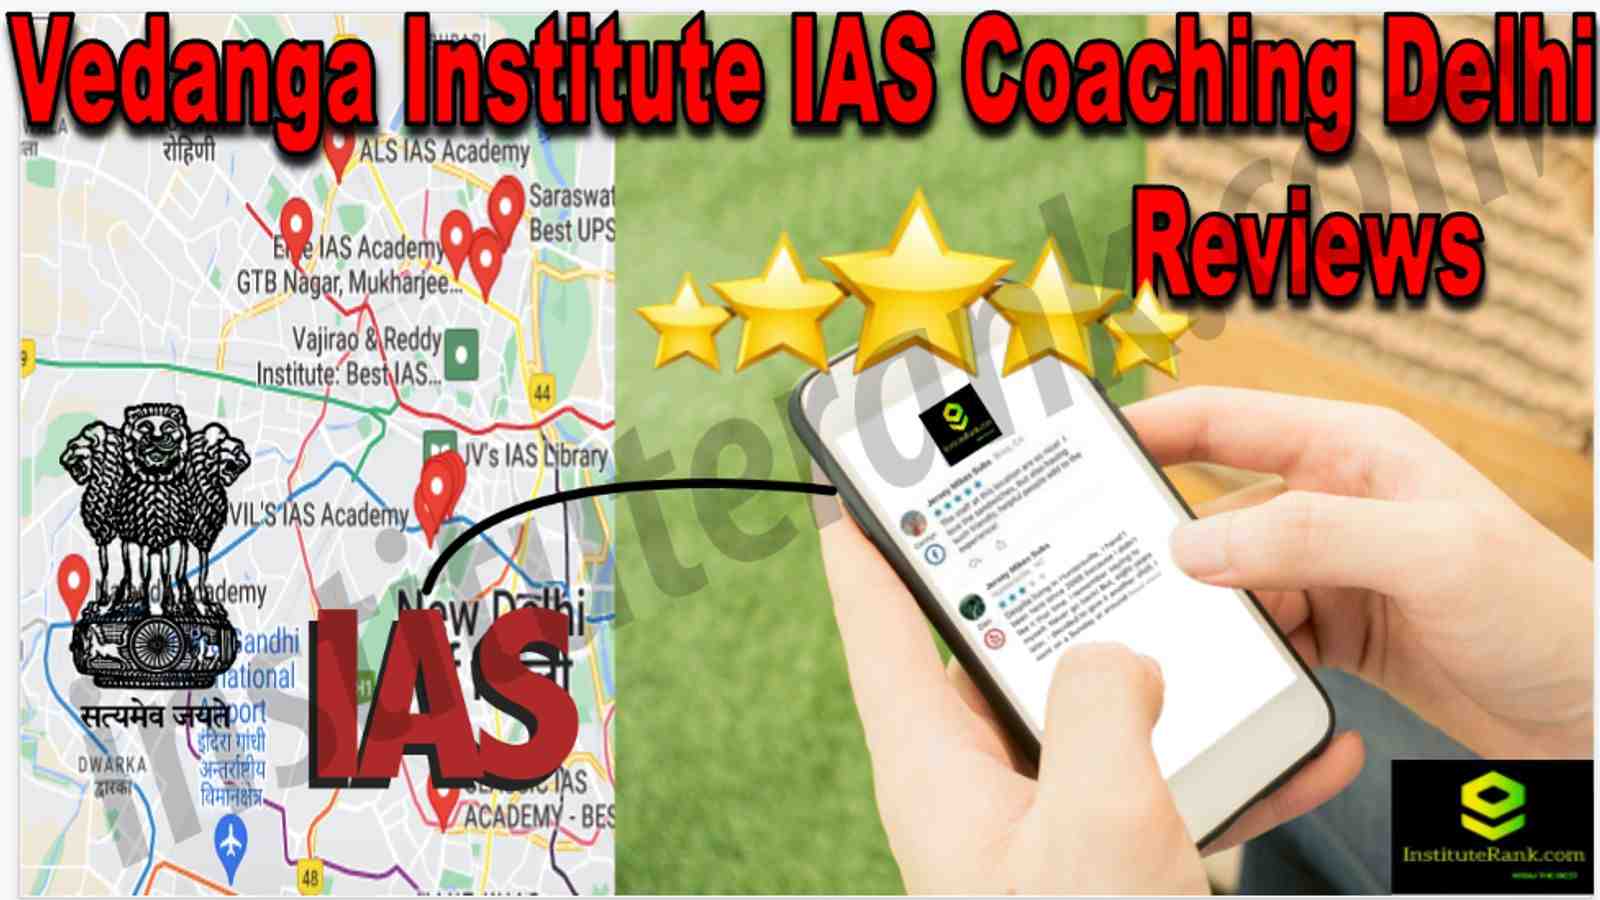 Vedanga Institute IAS Coaching Delhi Reviews